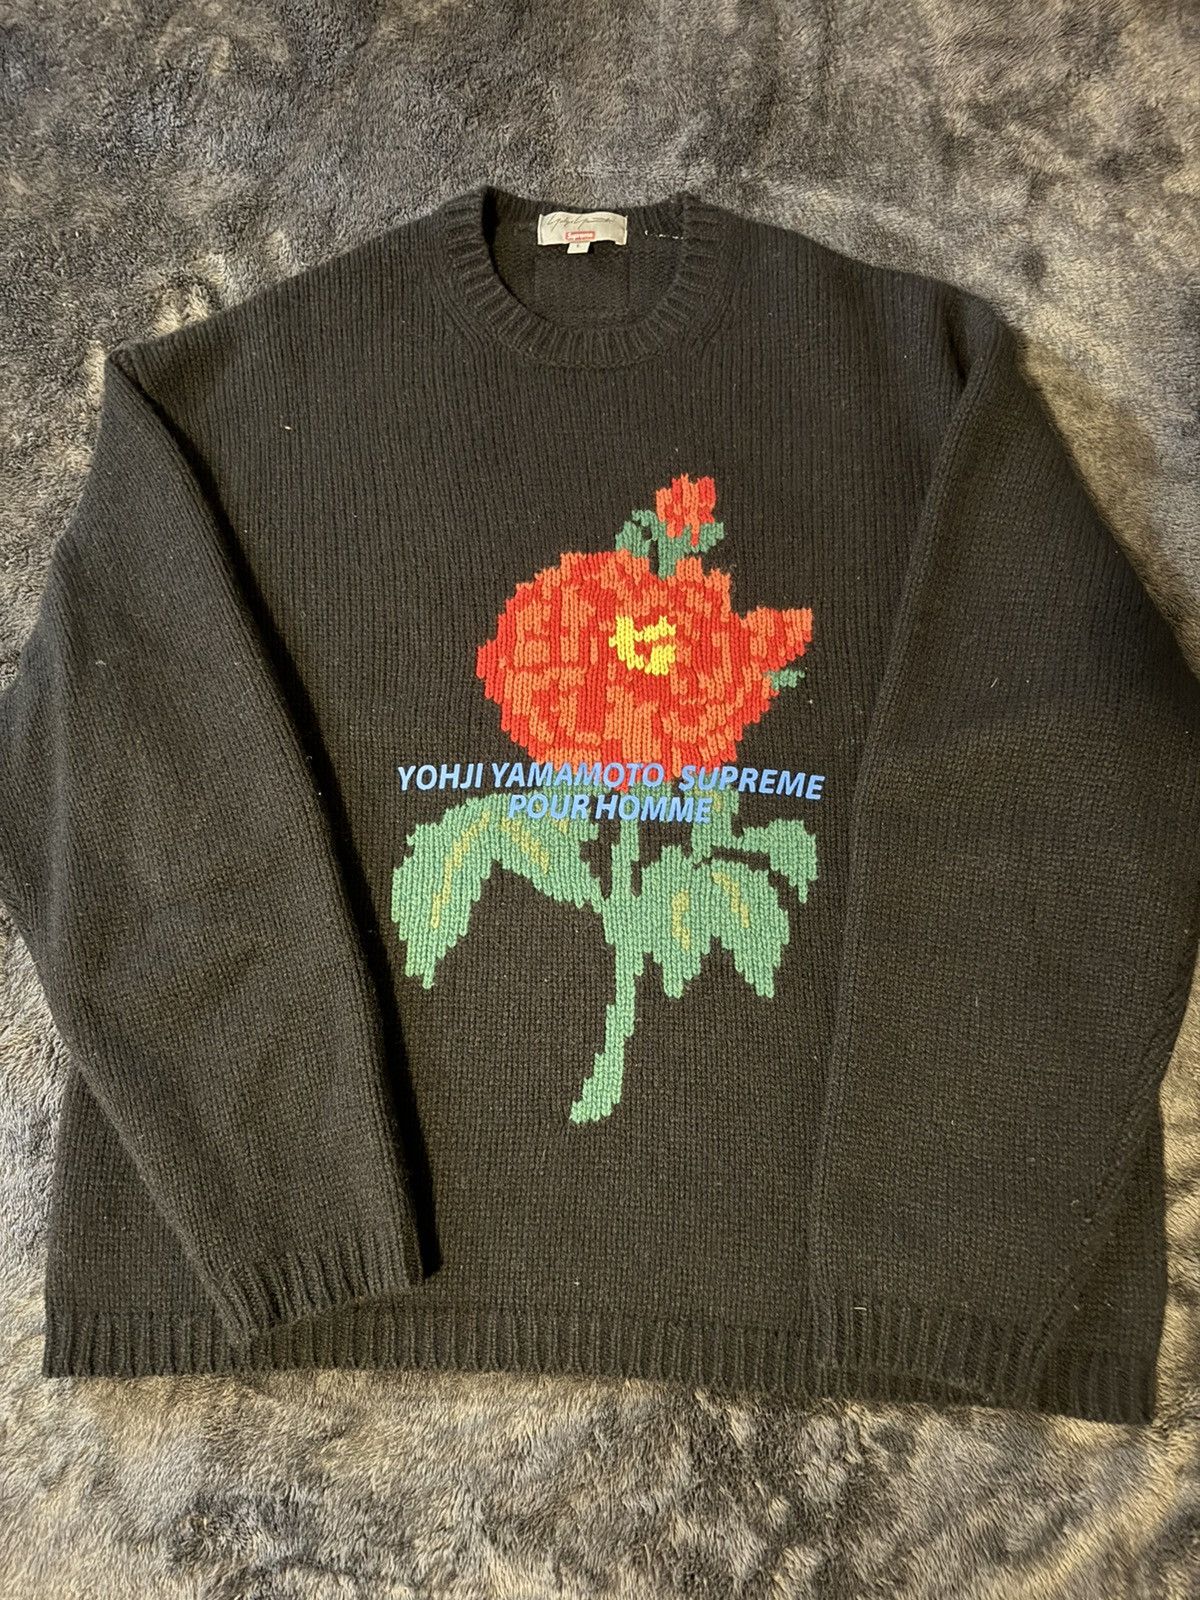 Yohji Yamamoto Supreme Sweater | Grailed